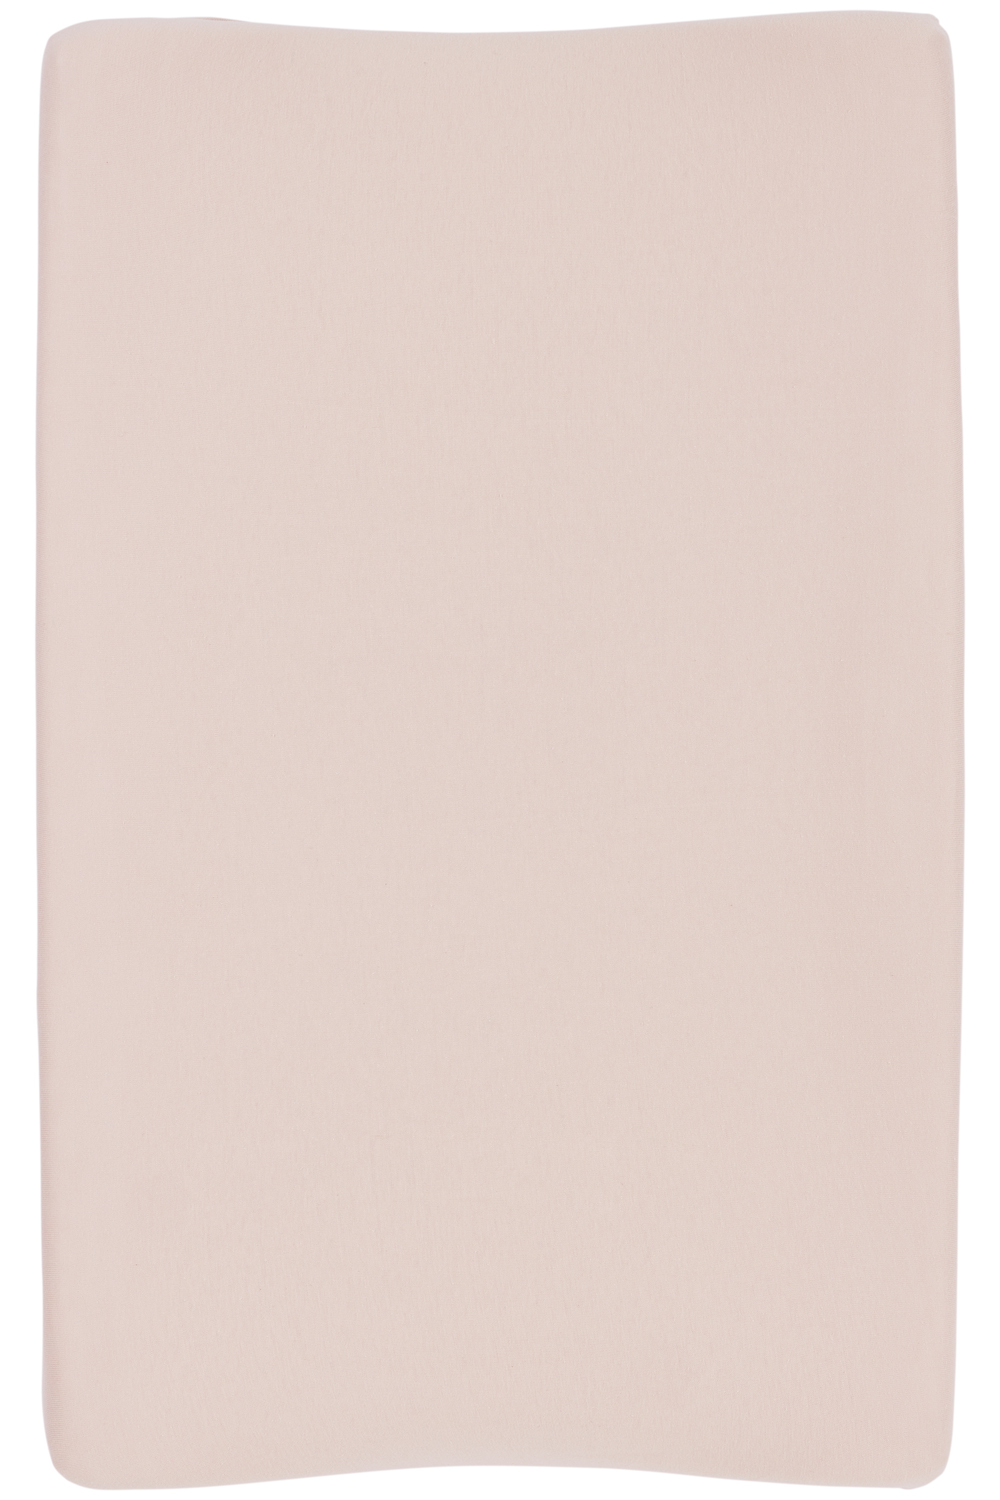 Aankleedkussenhoes Basic Jersey - Soft Pink - 50x70cm